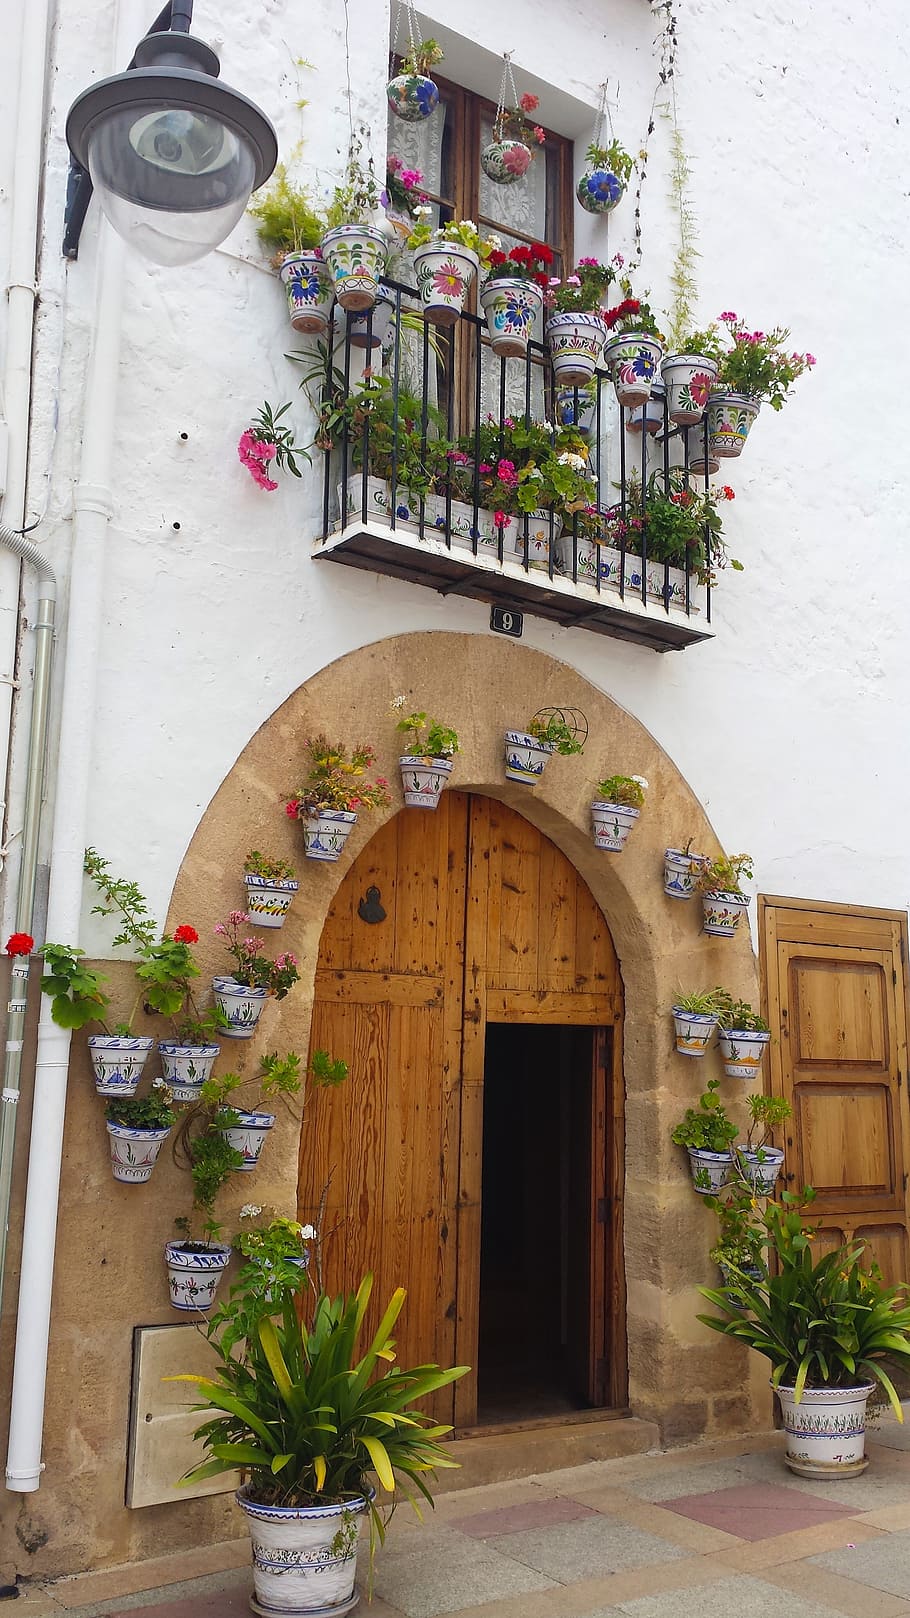 spain, house, flowers, javea, europe, spanish, architecture, building, summer, travel